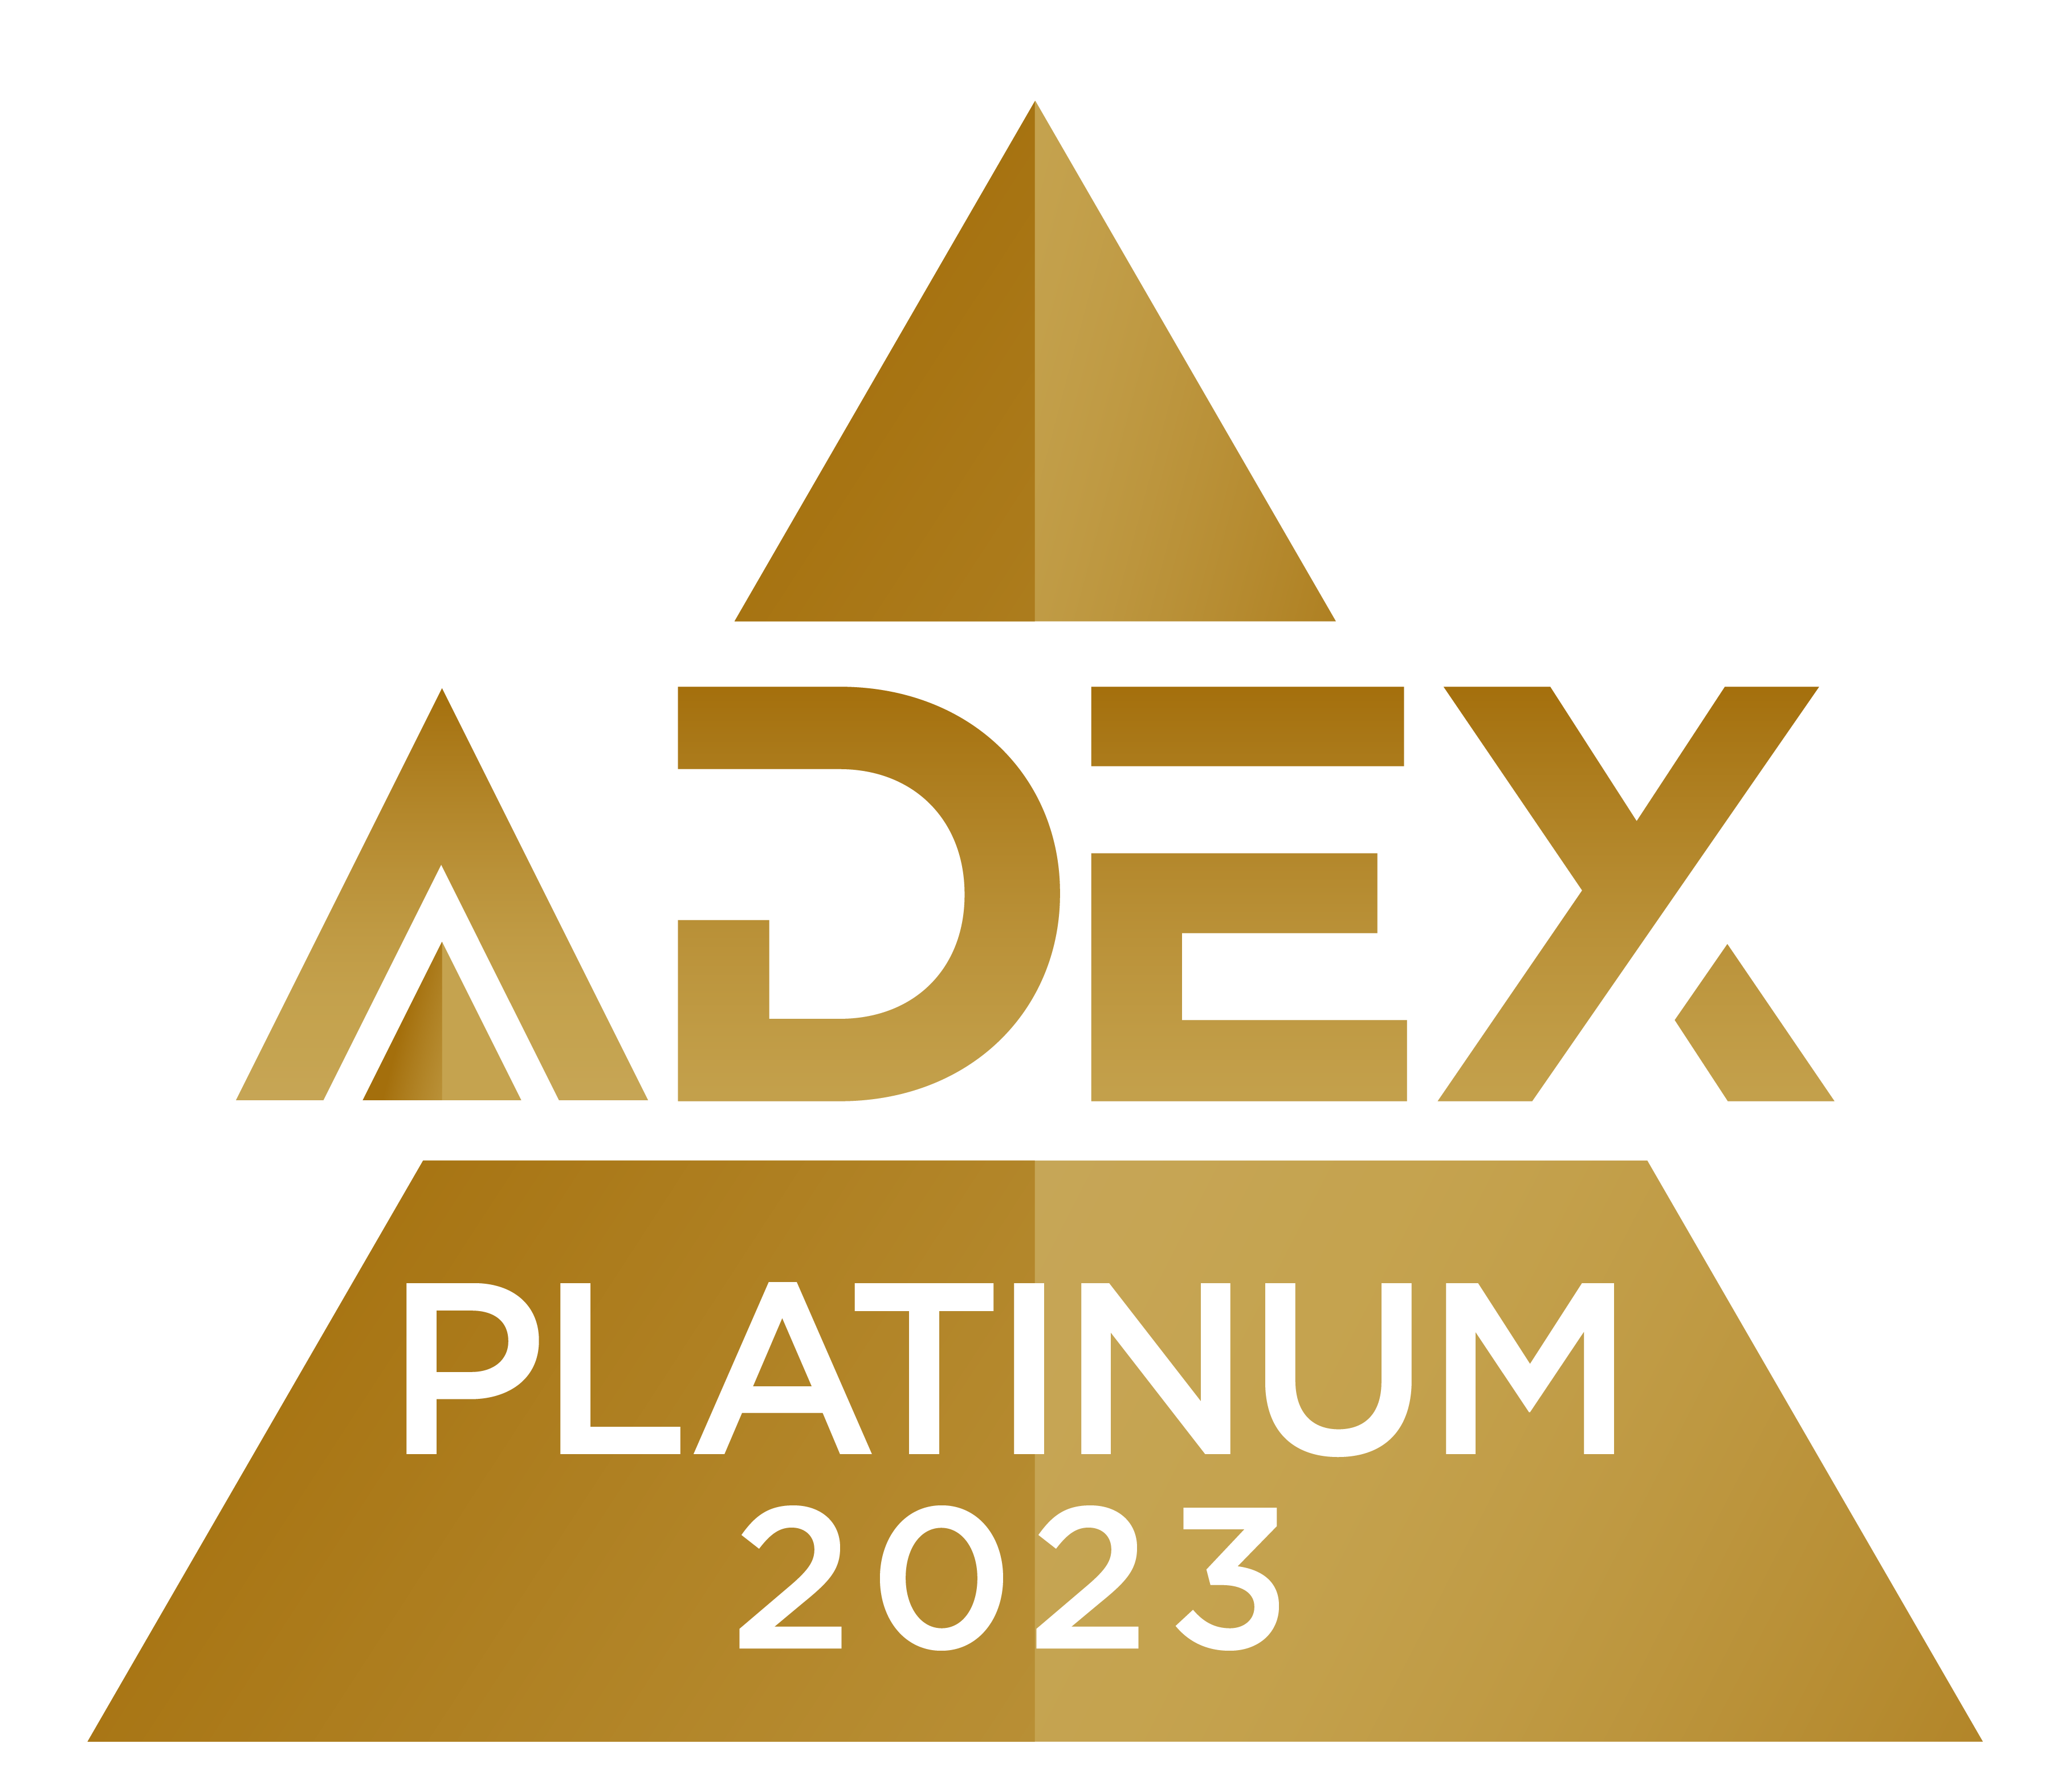 ADEX 2023 Platinum Award logo